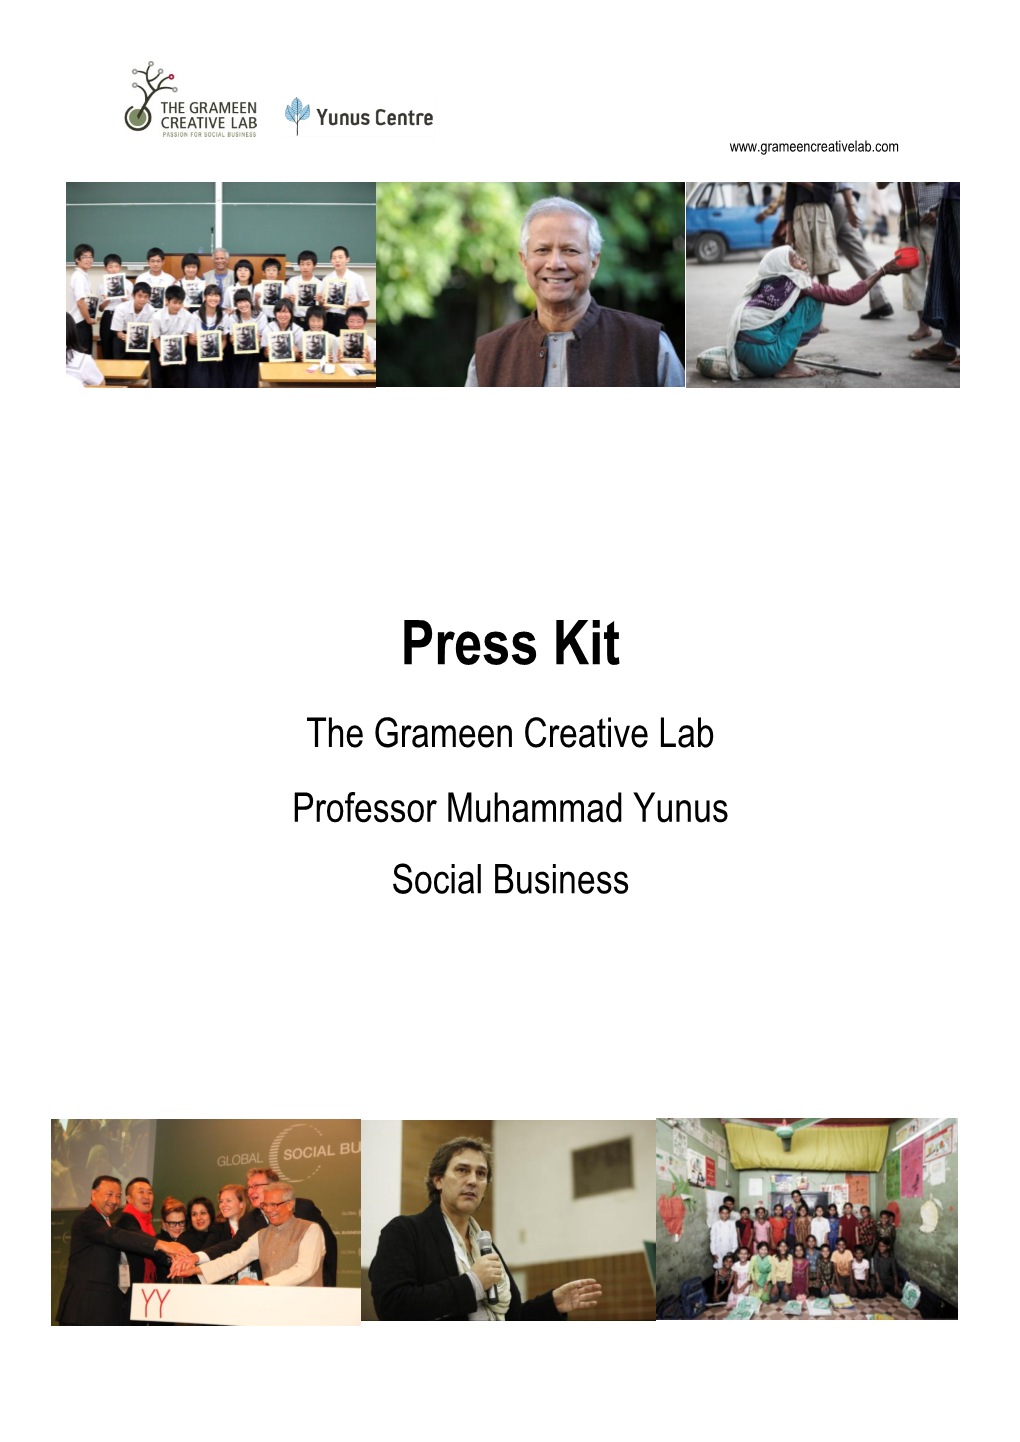 Press Kit the Grameen Creative Lab Professor Muhammad Yunus Social Business